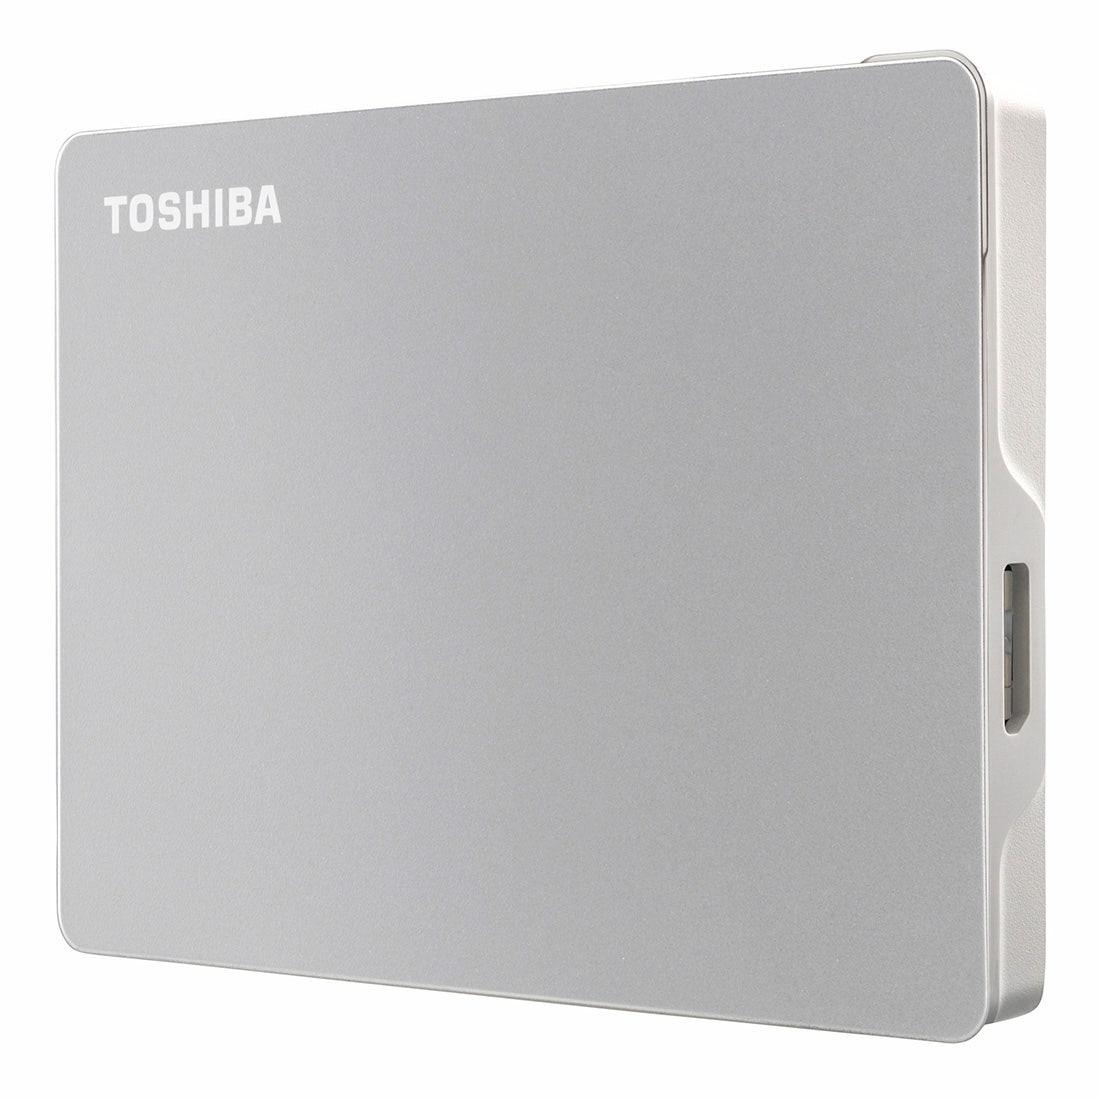 HD Externo Toshiba 2TB Canvio Flex Prata HDTX120XSCAA I - Mega Market